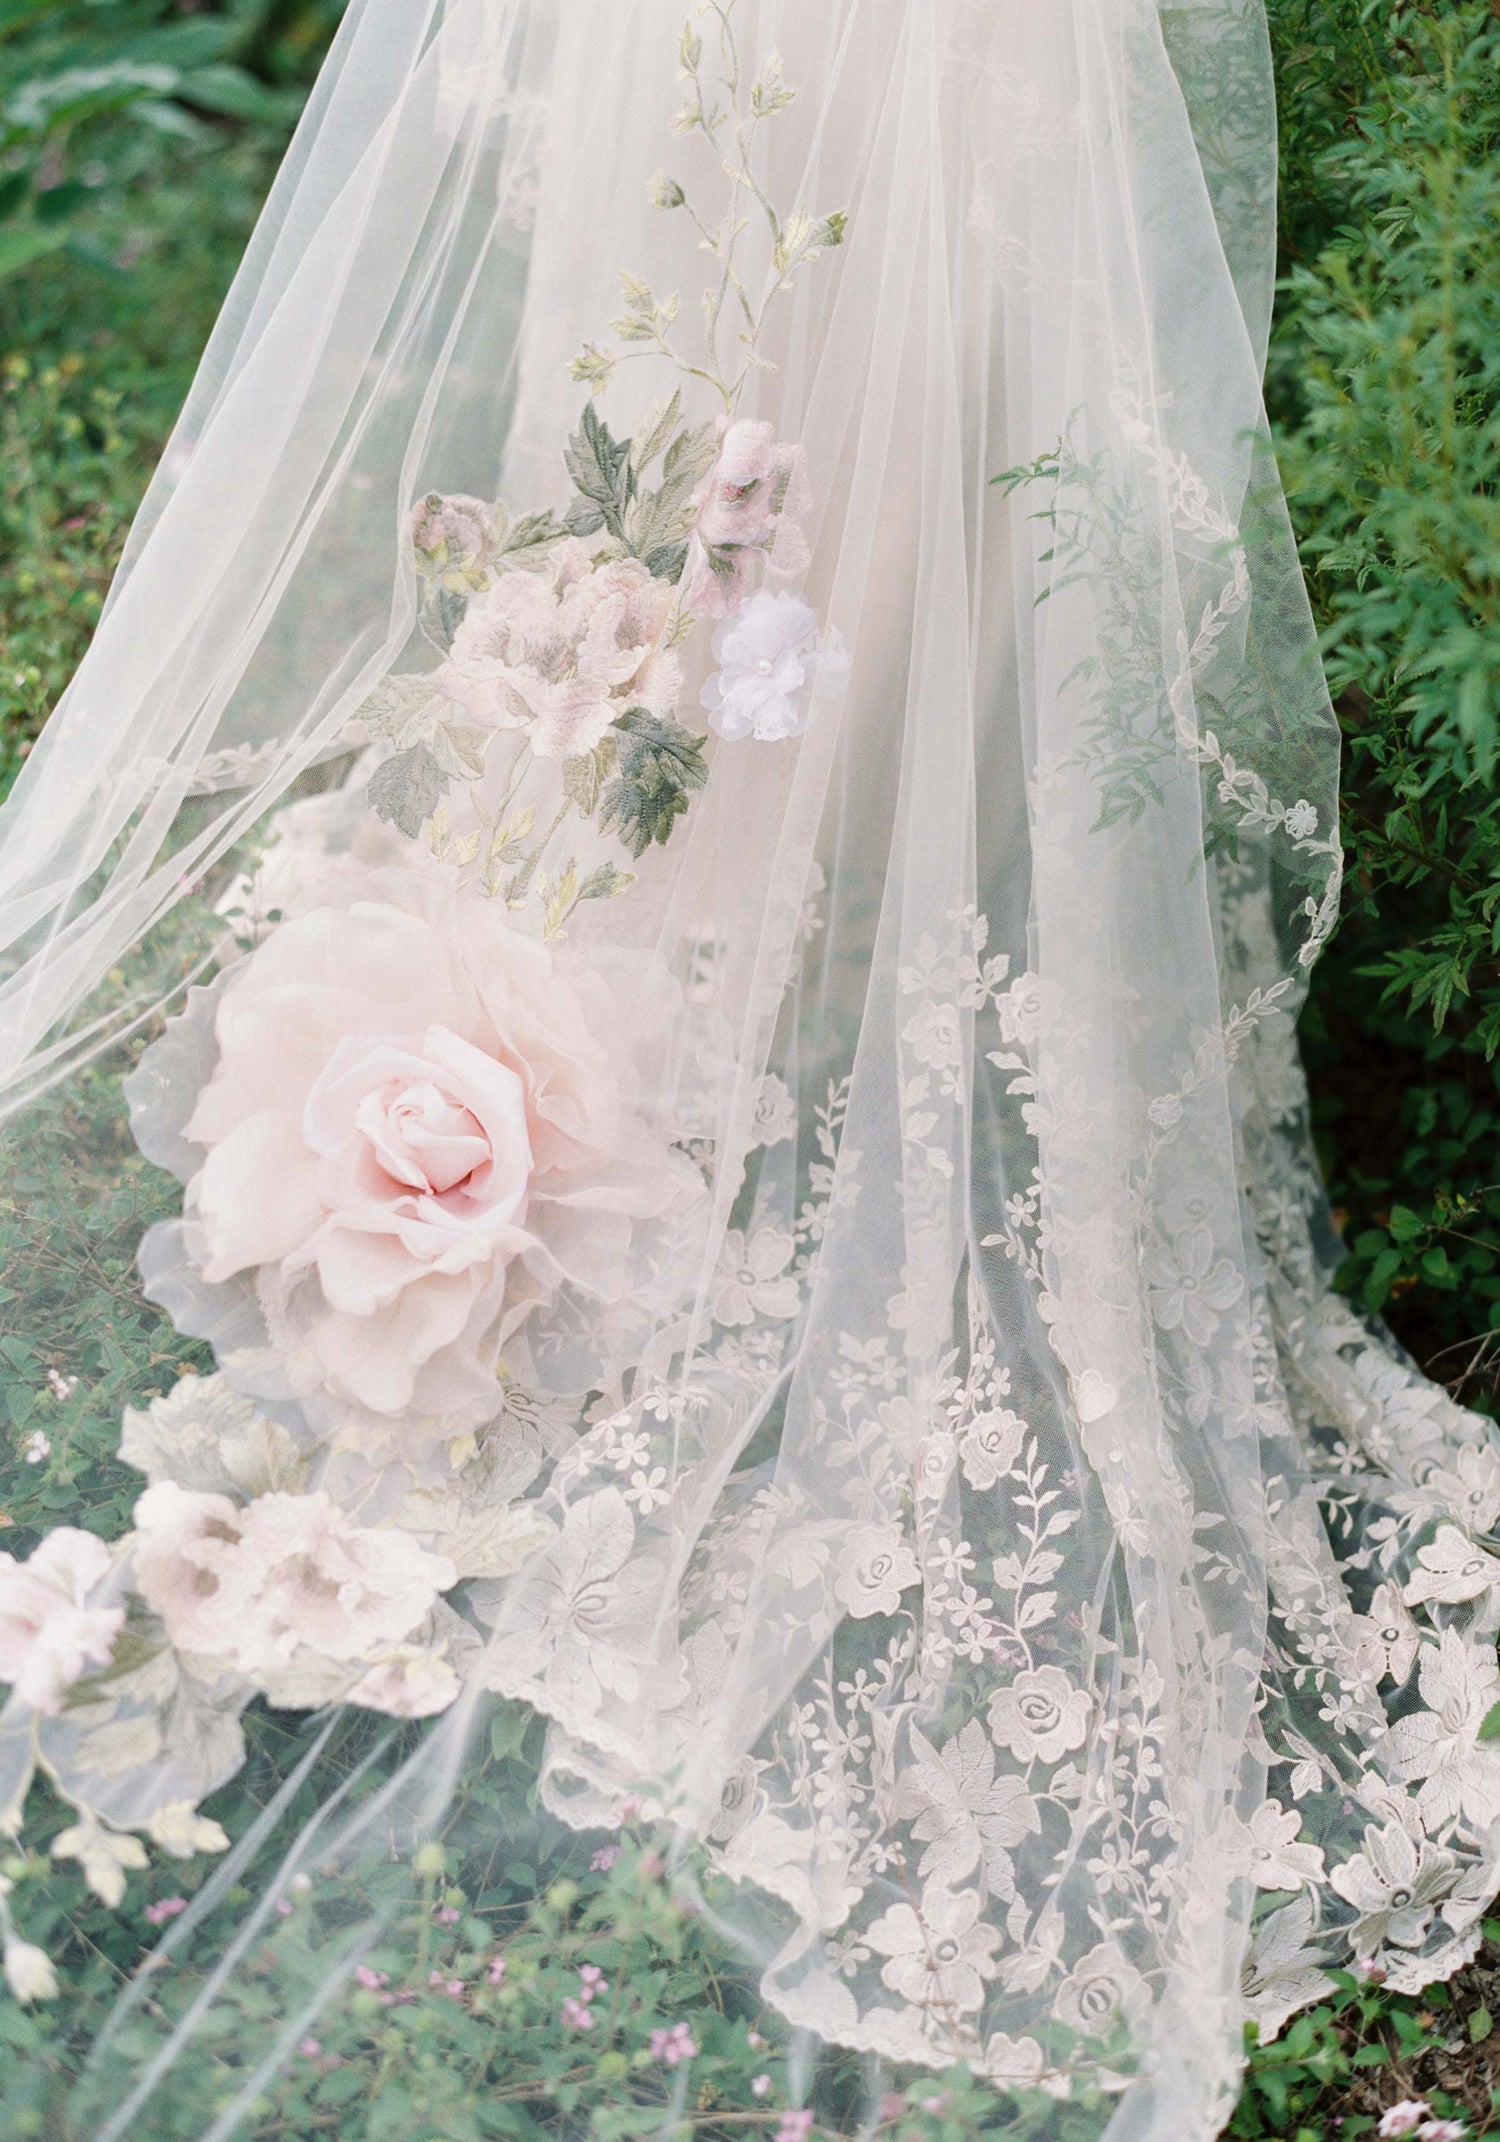 Enchanted veil